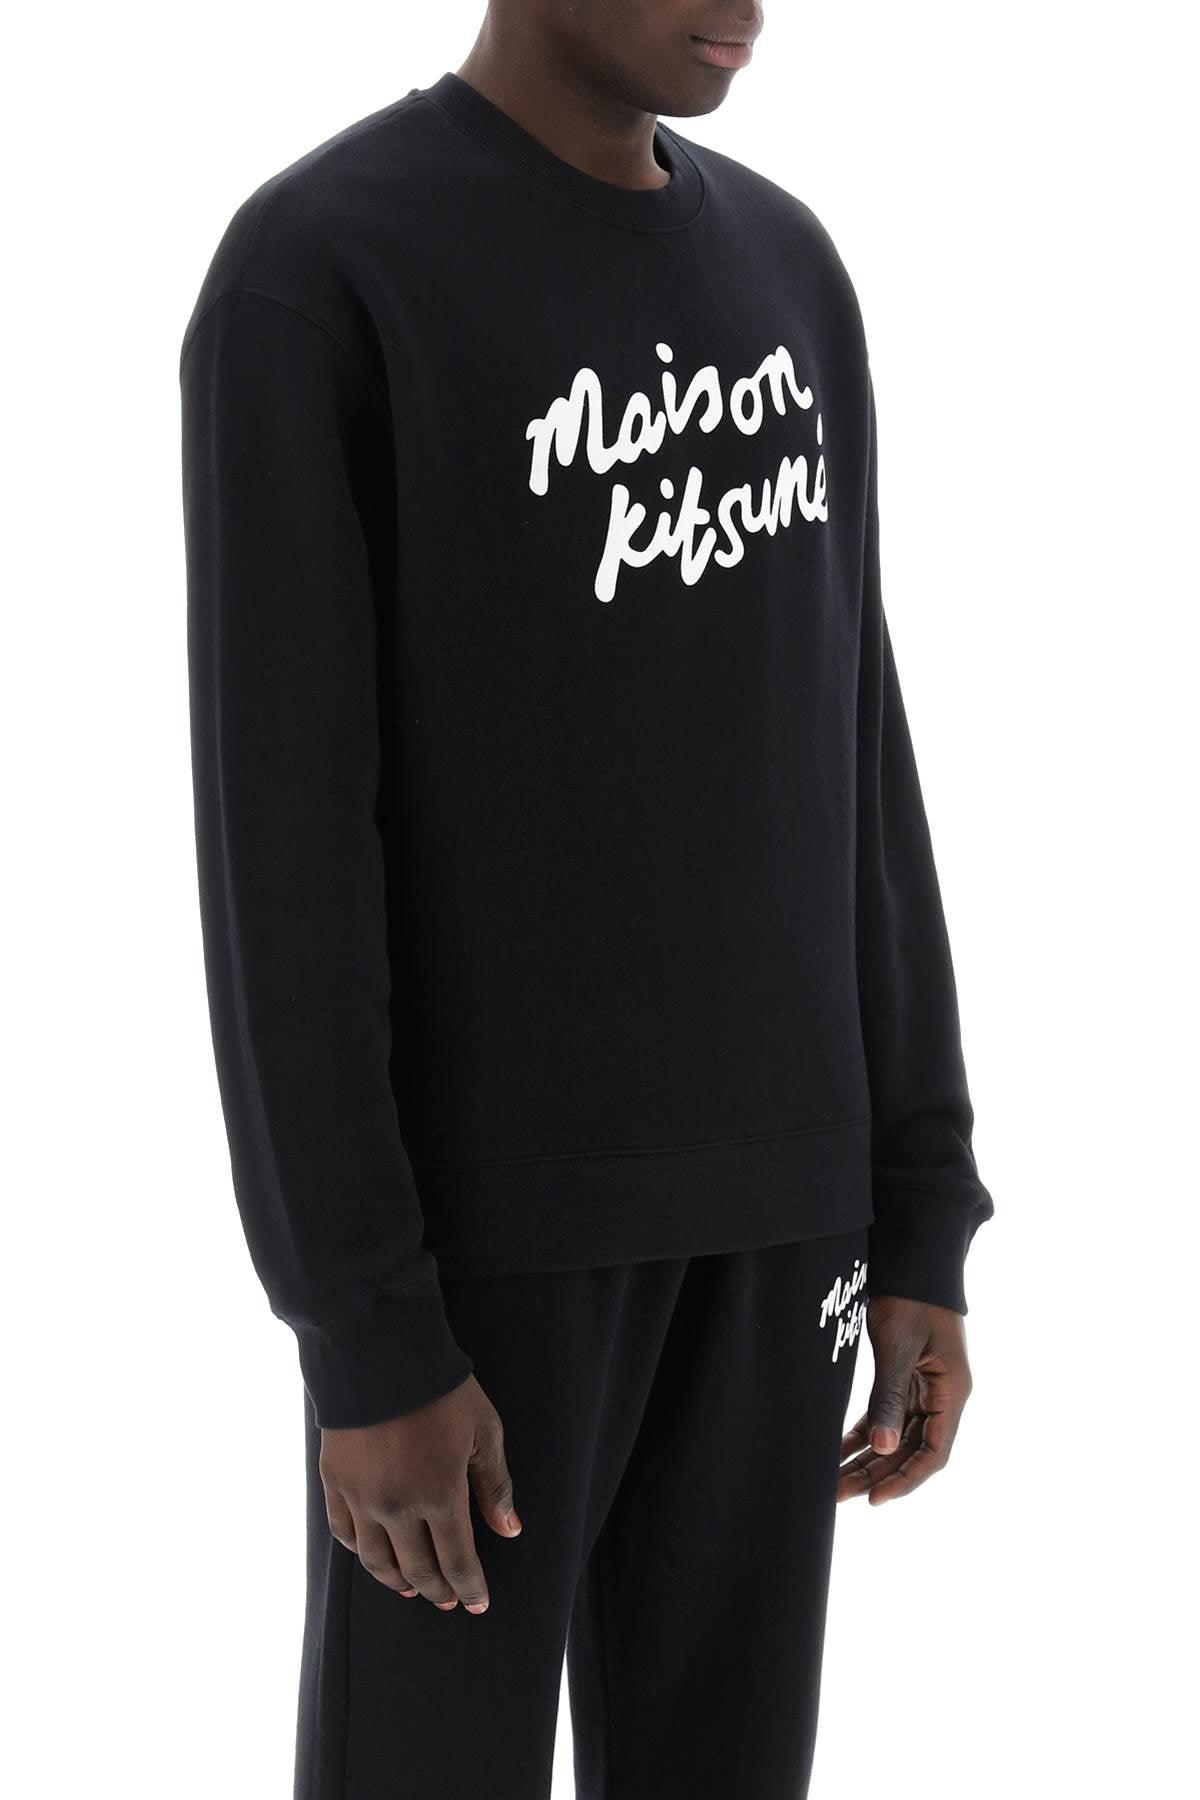 Maison Kitsune Black Cotton Handwriting Comfort Sweatshirt - JOHN JULIA